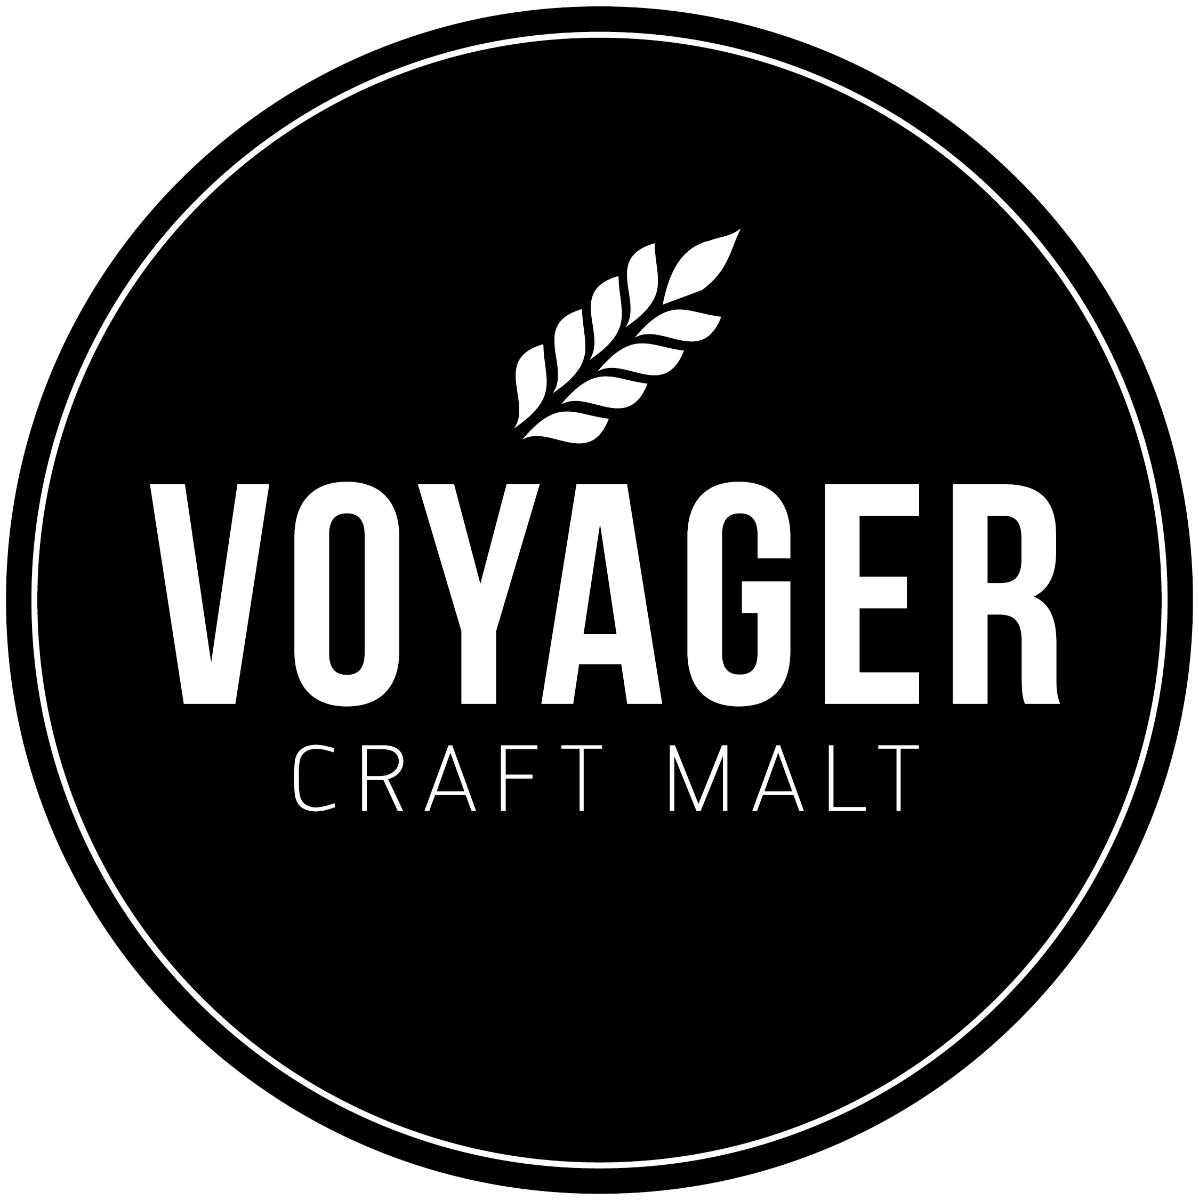 Voyager Biscuit Malt